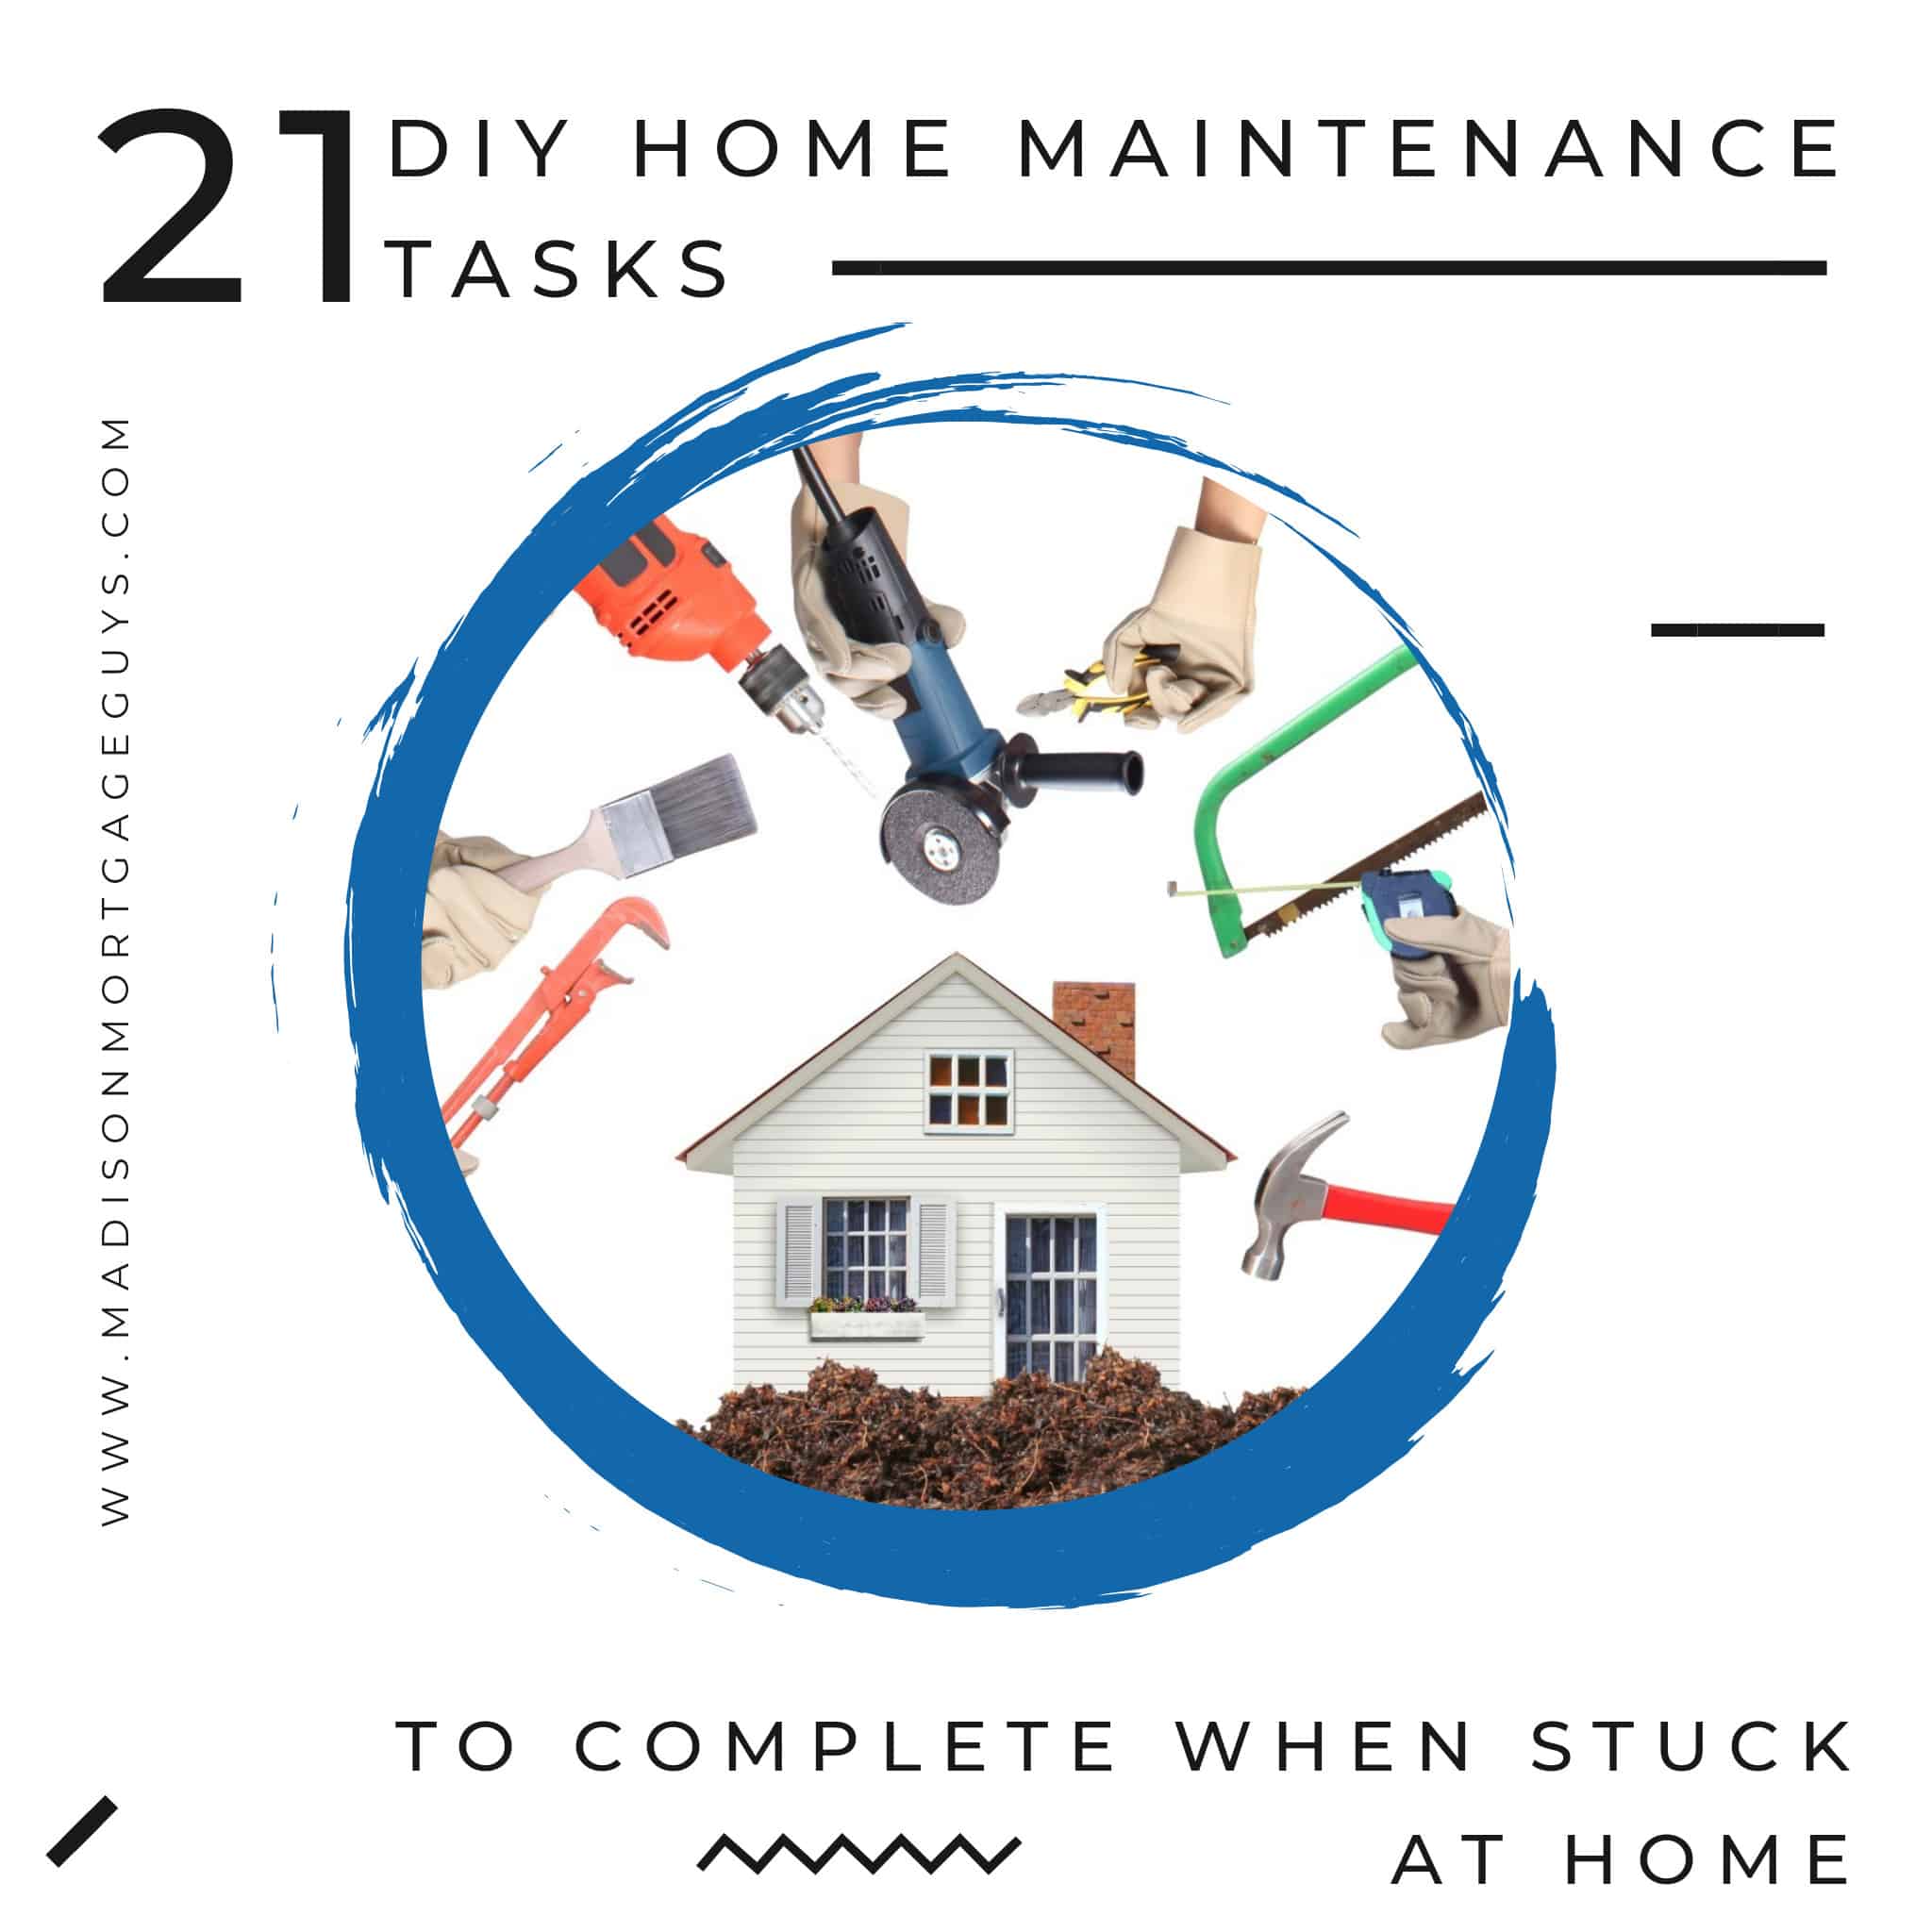 21 Diy Home Maintenance Tasks To